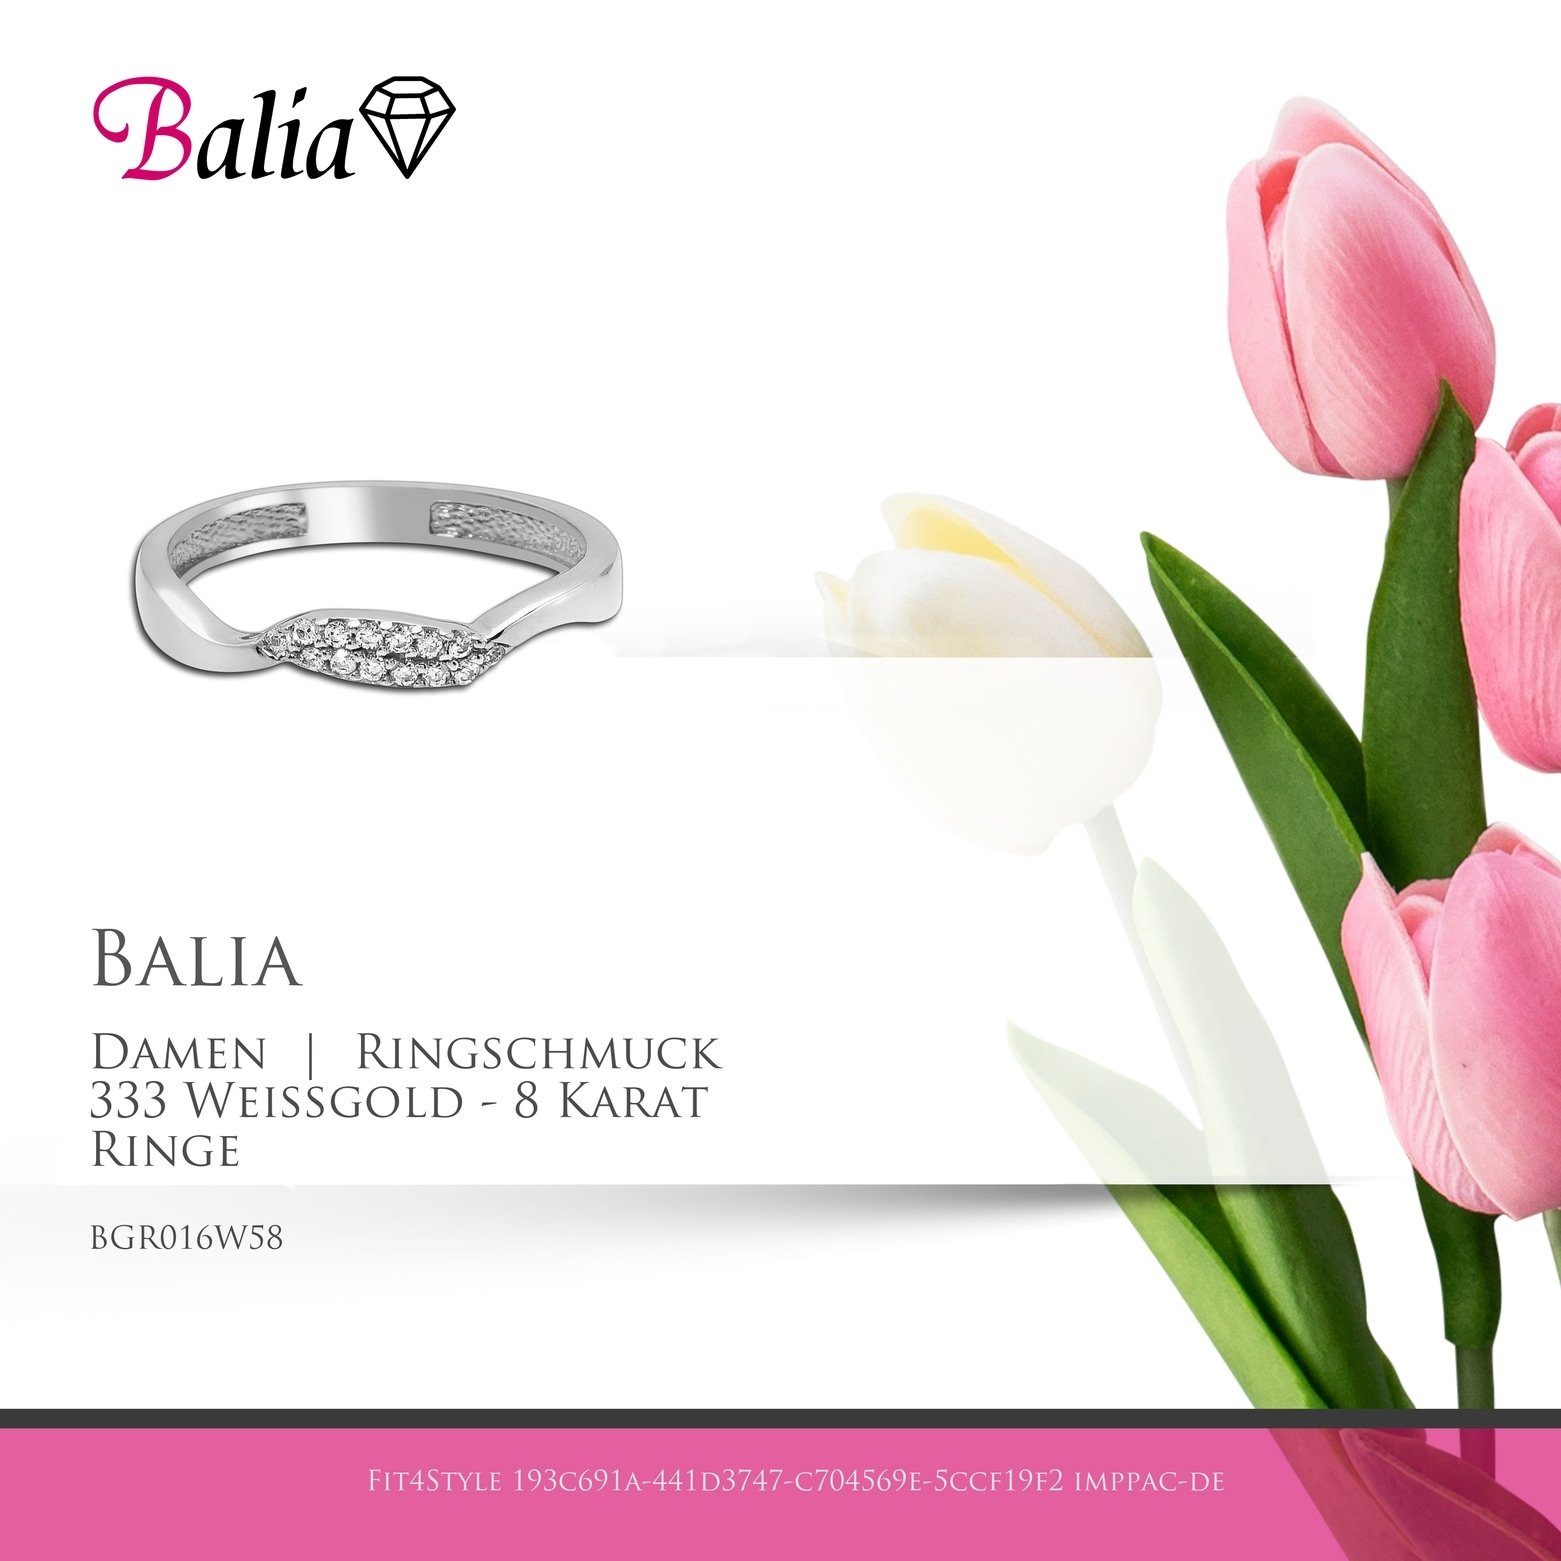 Balia Goldring Balia 8 Gr.58 Damen Ringe, Gold Weißgold (Fingerring), Karat Damen Welle Ring 333 8Kt 58 (18,4) - Welle